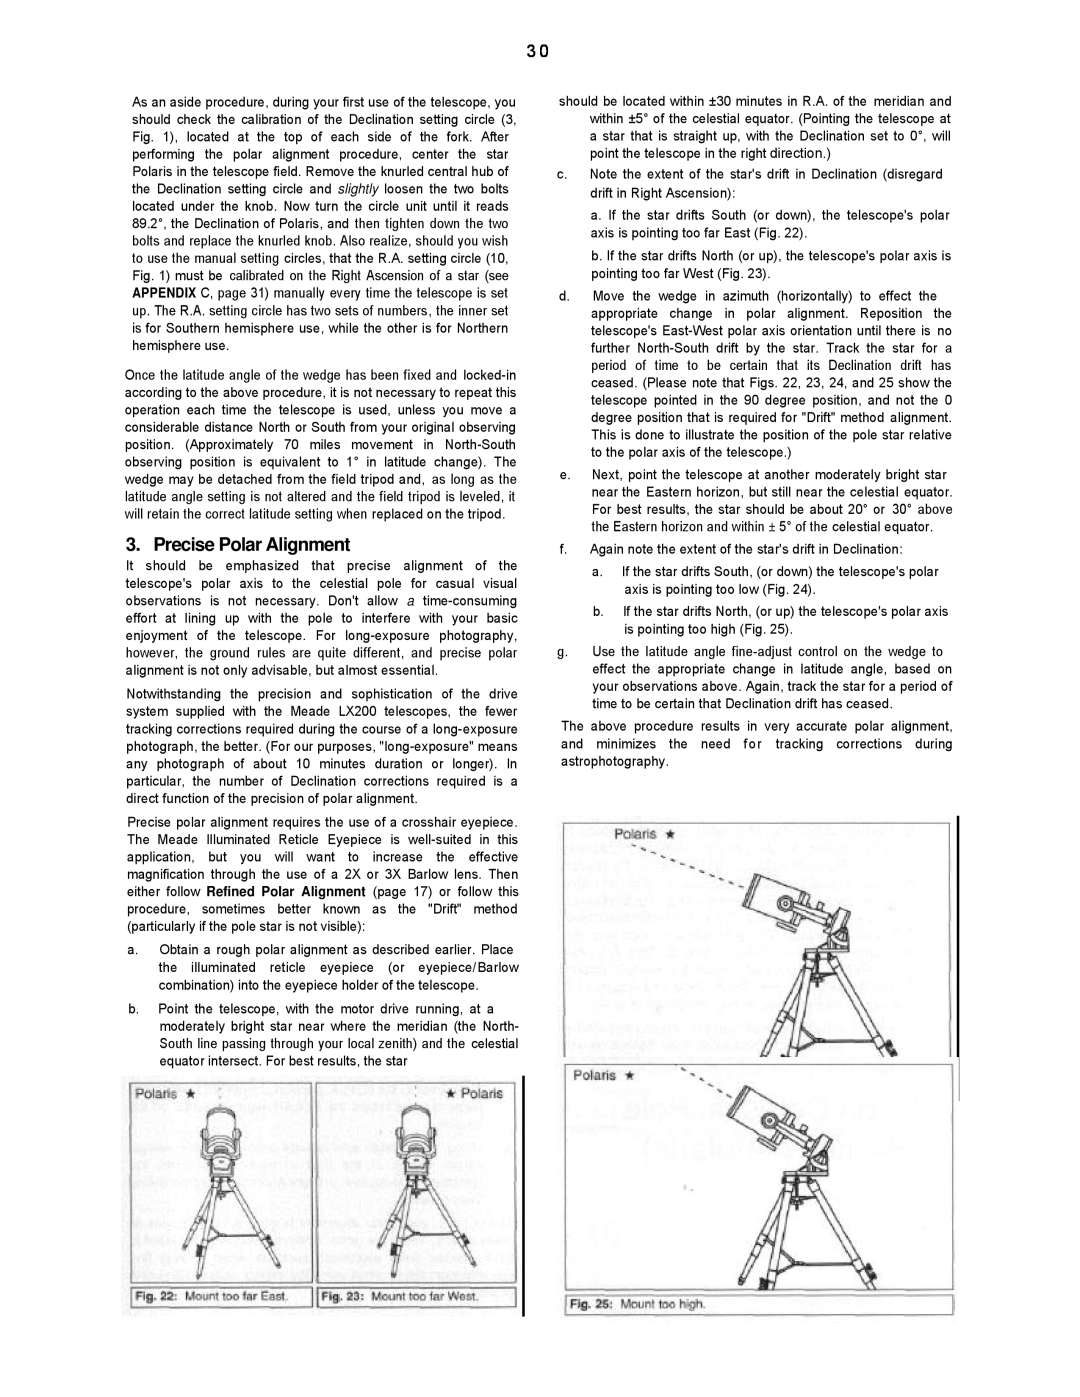 Leisure Time LX20 instruction manual Precise Polar Alignment 